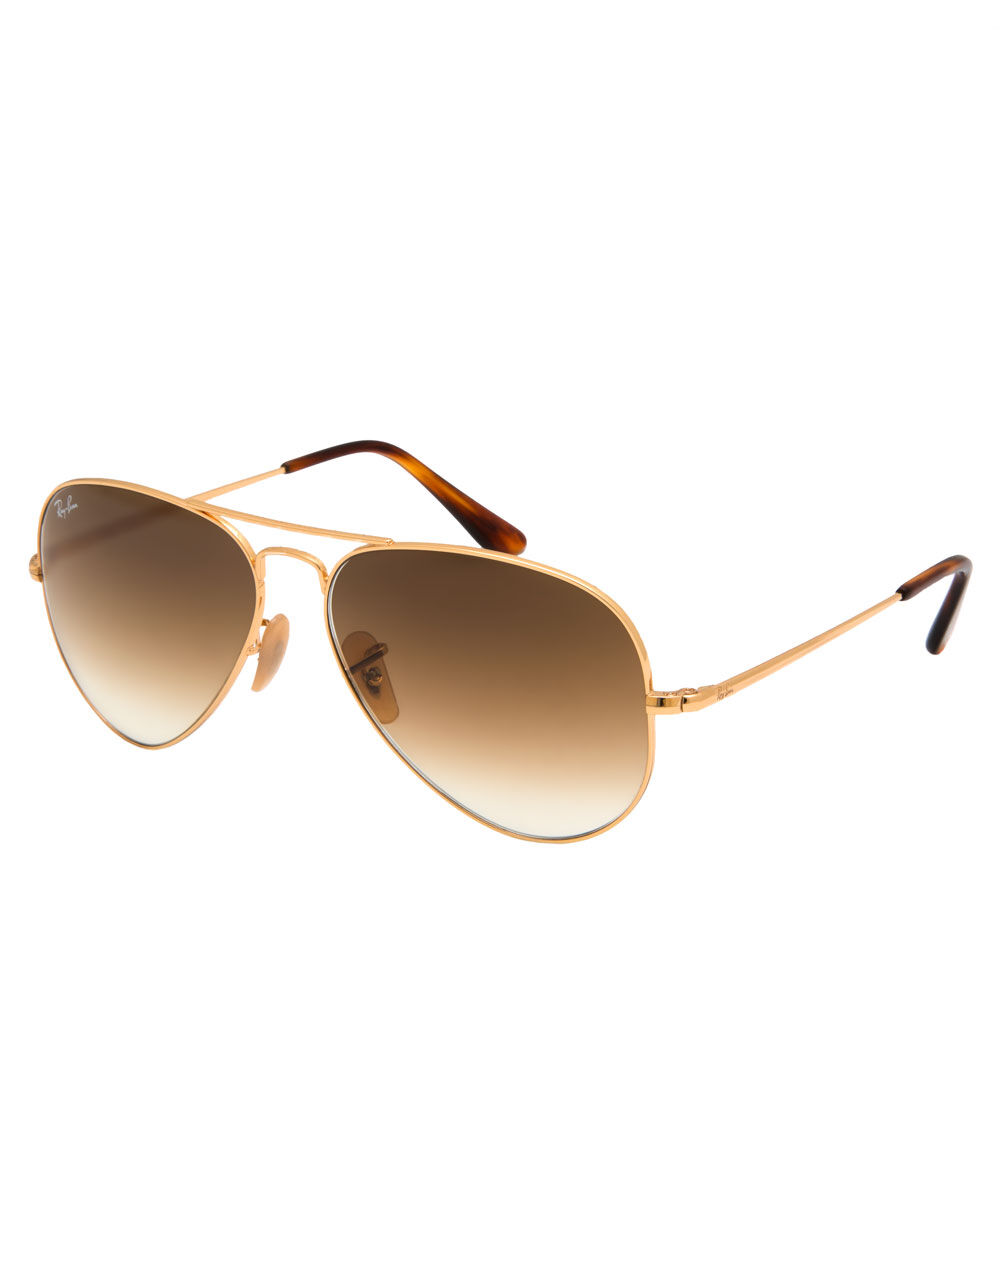 Ray-Ban Aviator Sunglasses: Polarized & Classic | Tillys